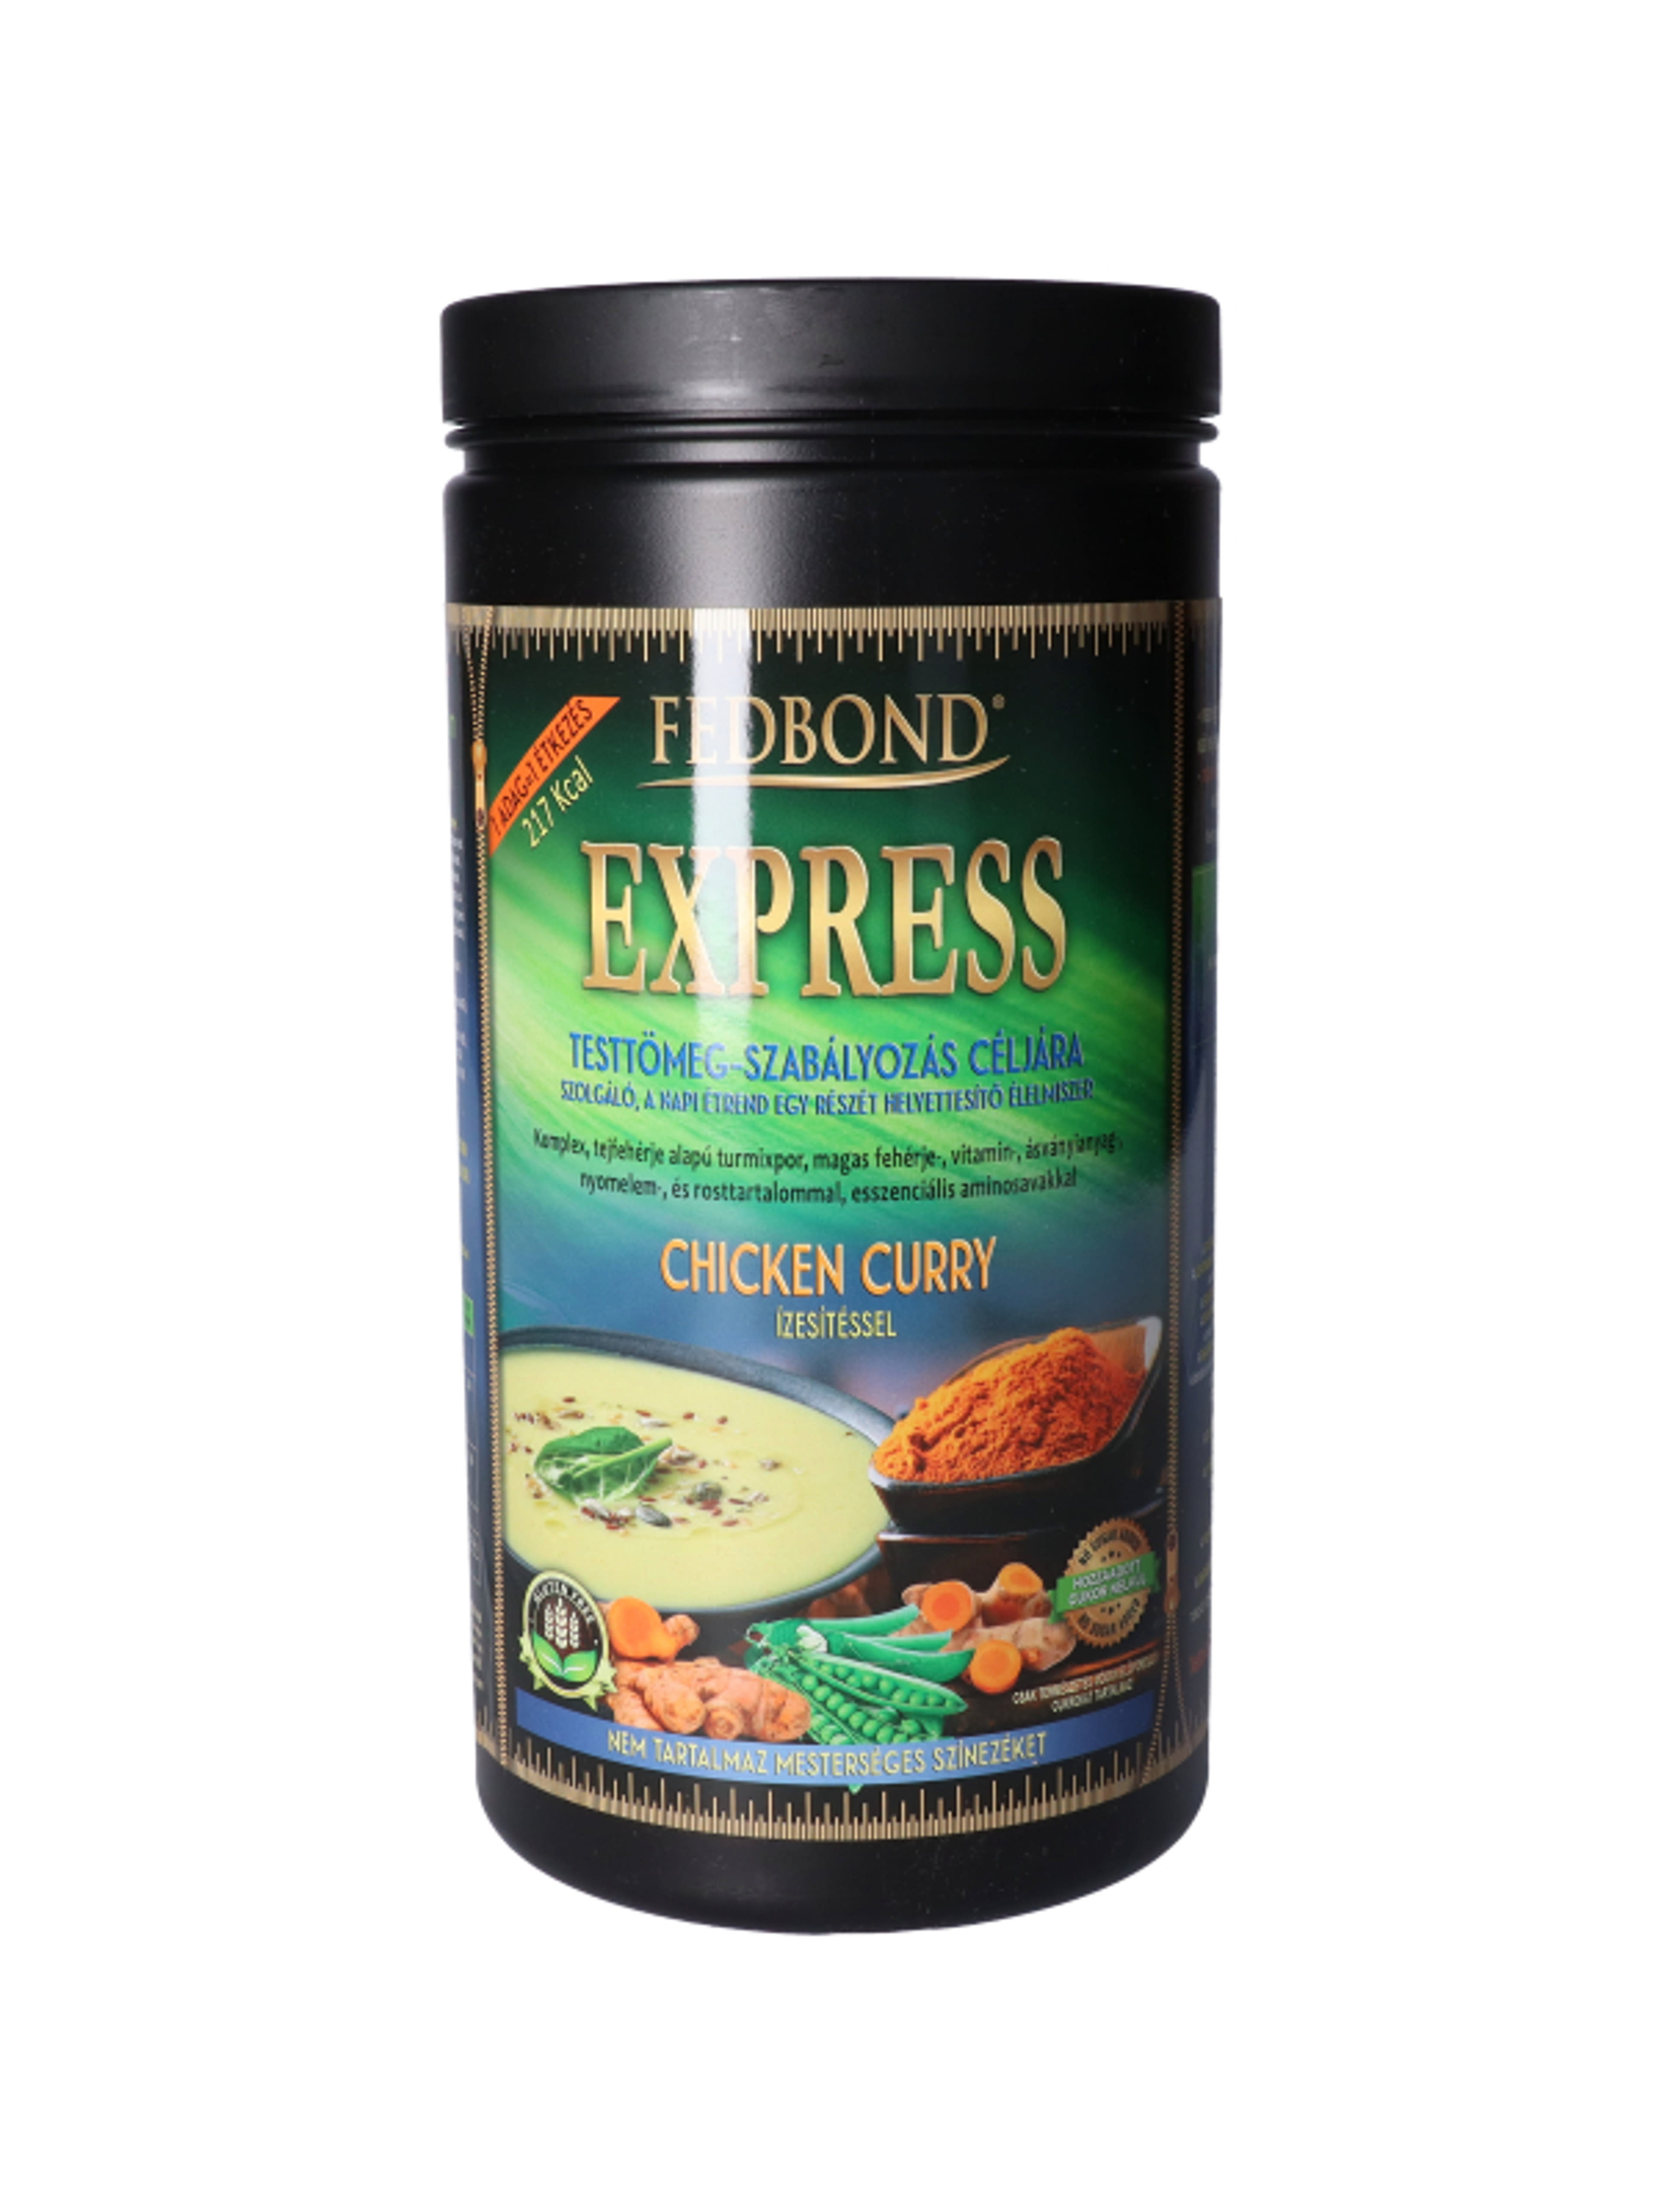 Fedbond express chicken curry - 900 g-1